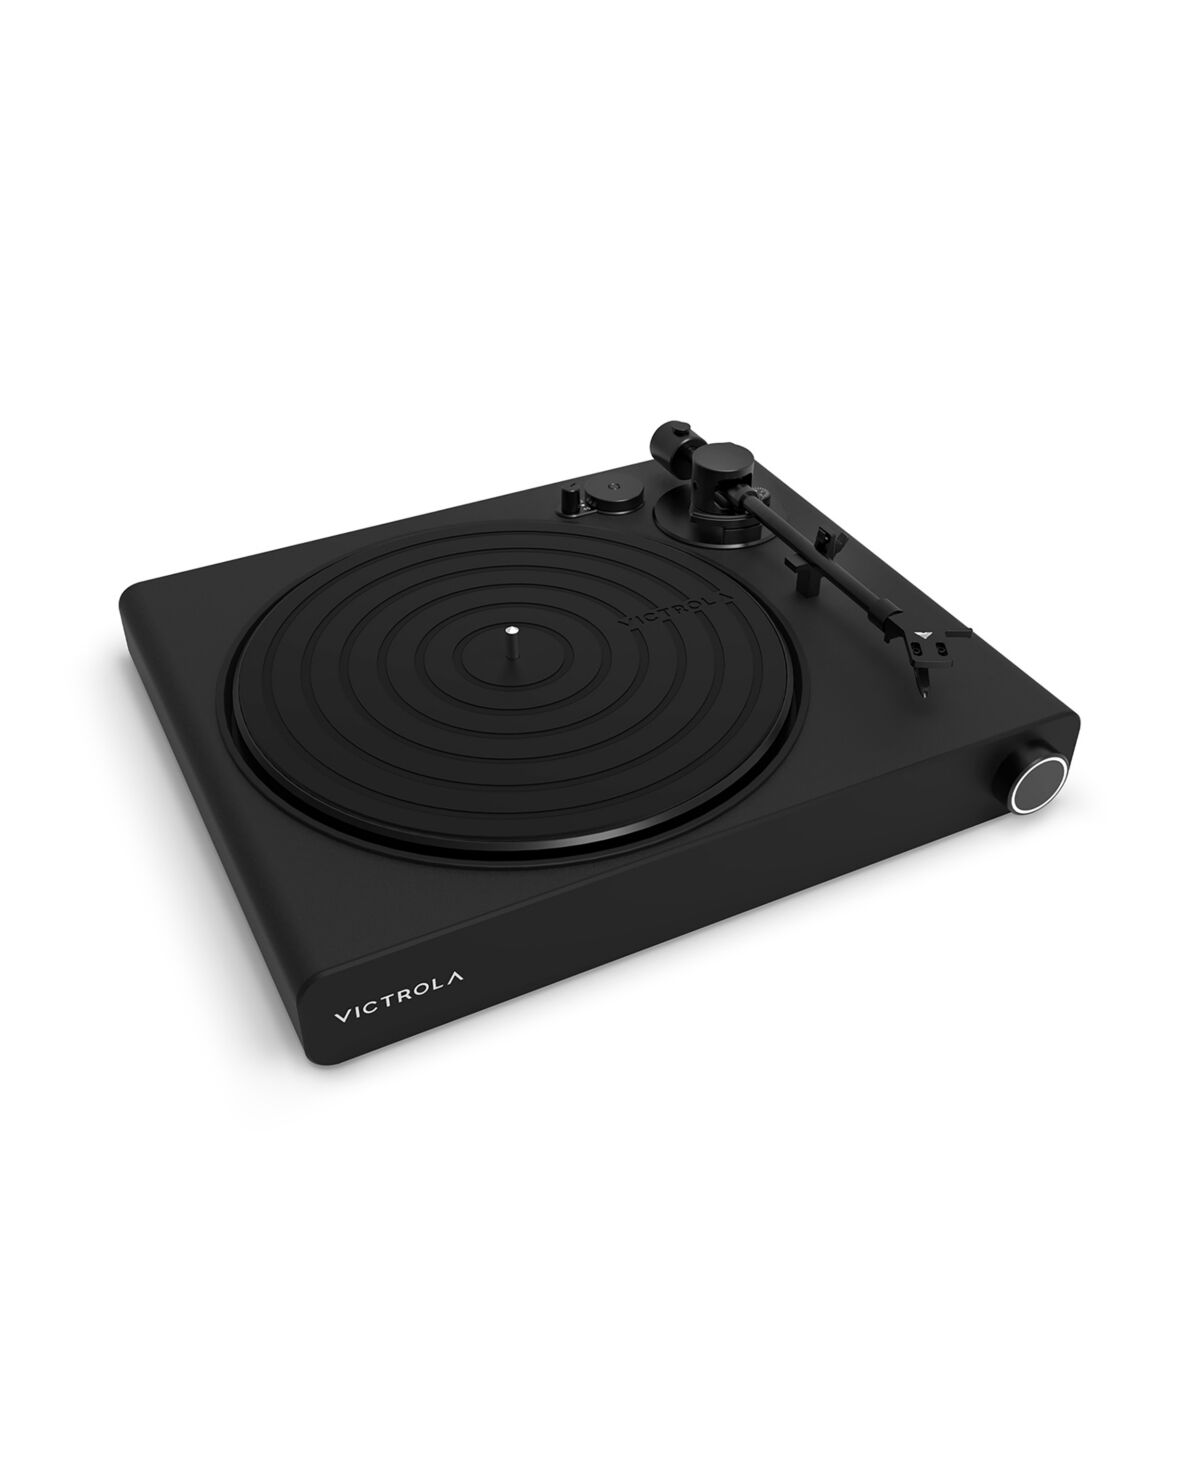 Victrola Stream Onyx Works with Sonos Turntable - Black